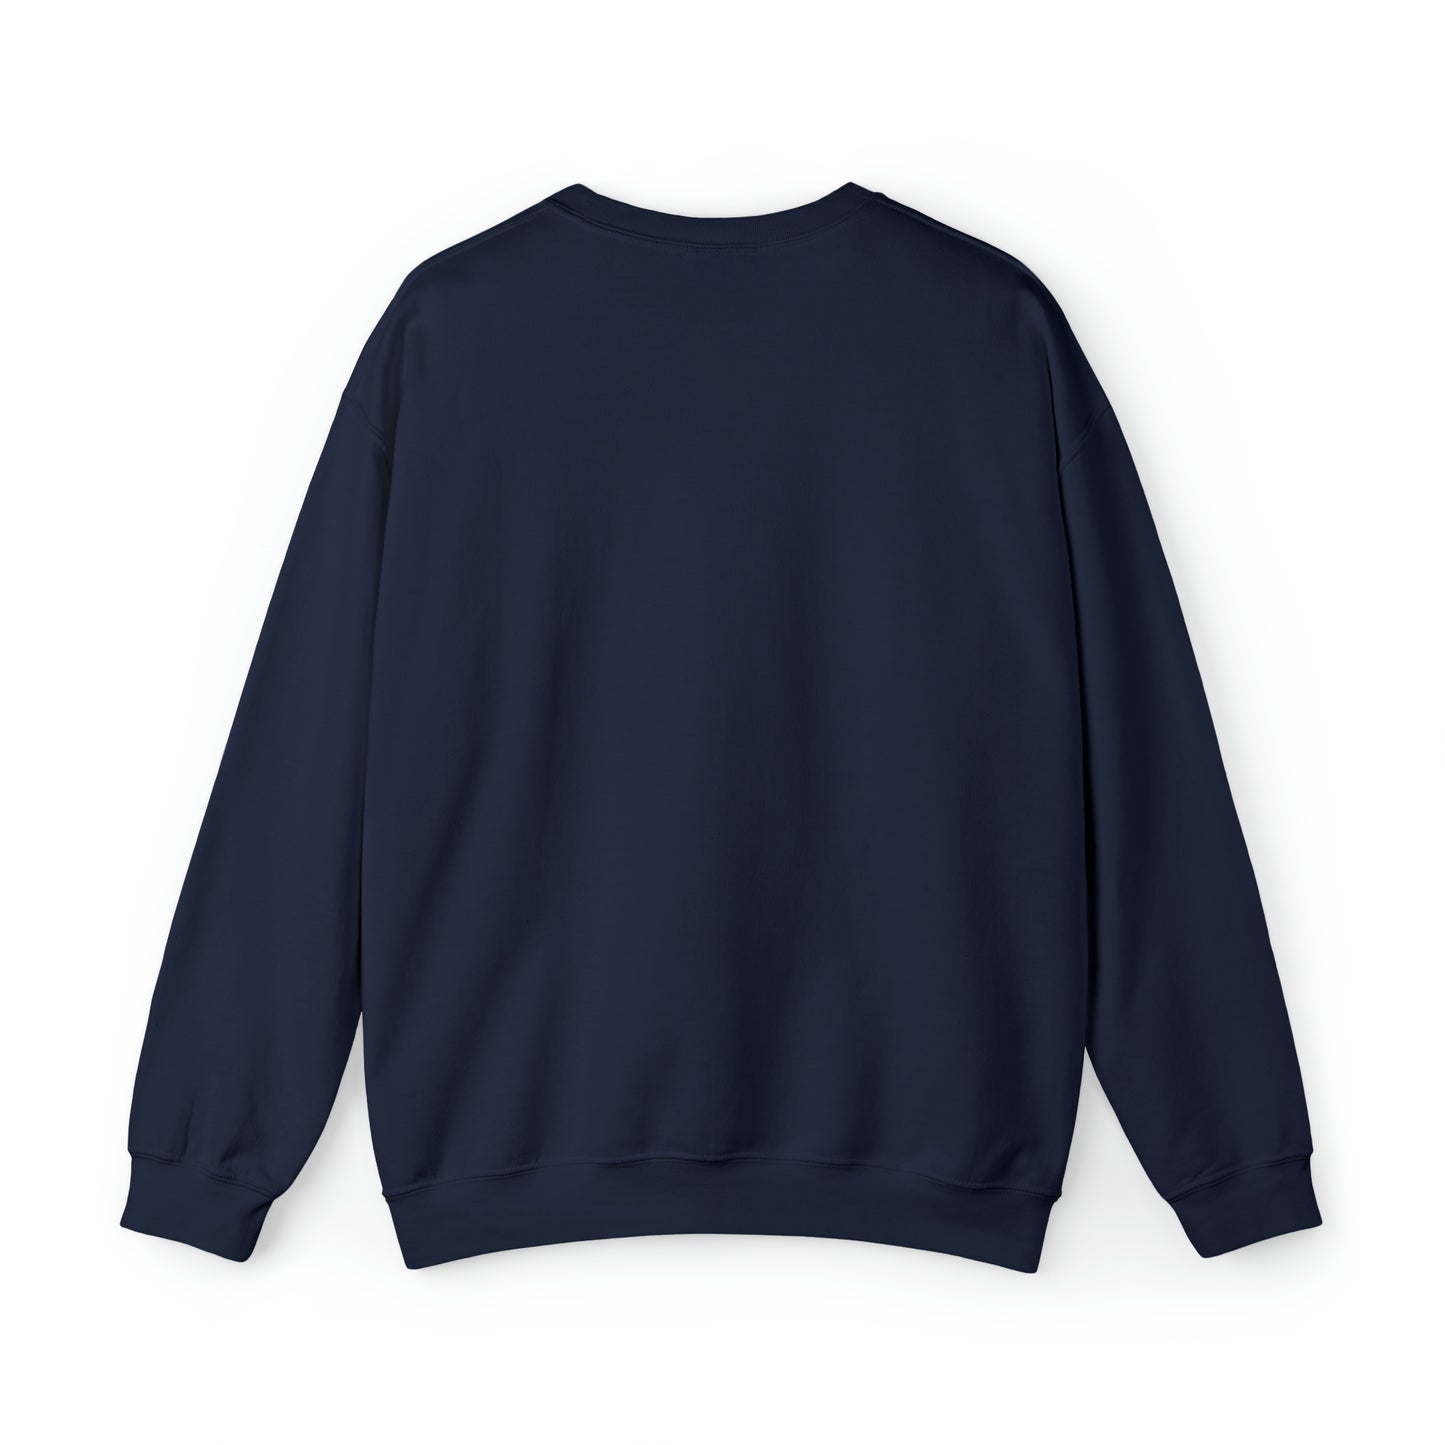 CINCY Unisex Heavy Blend™ Crewneck Sweatshirt